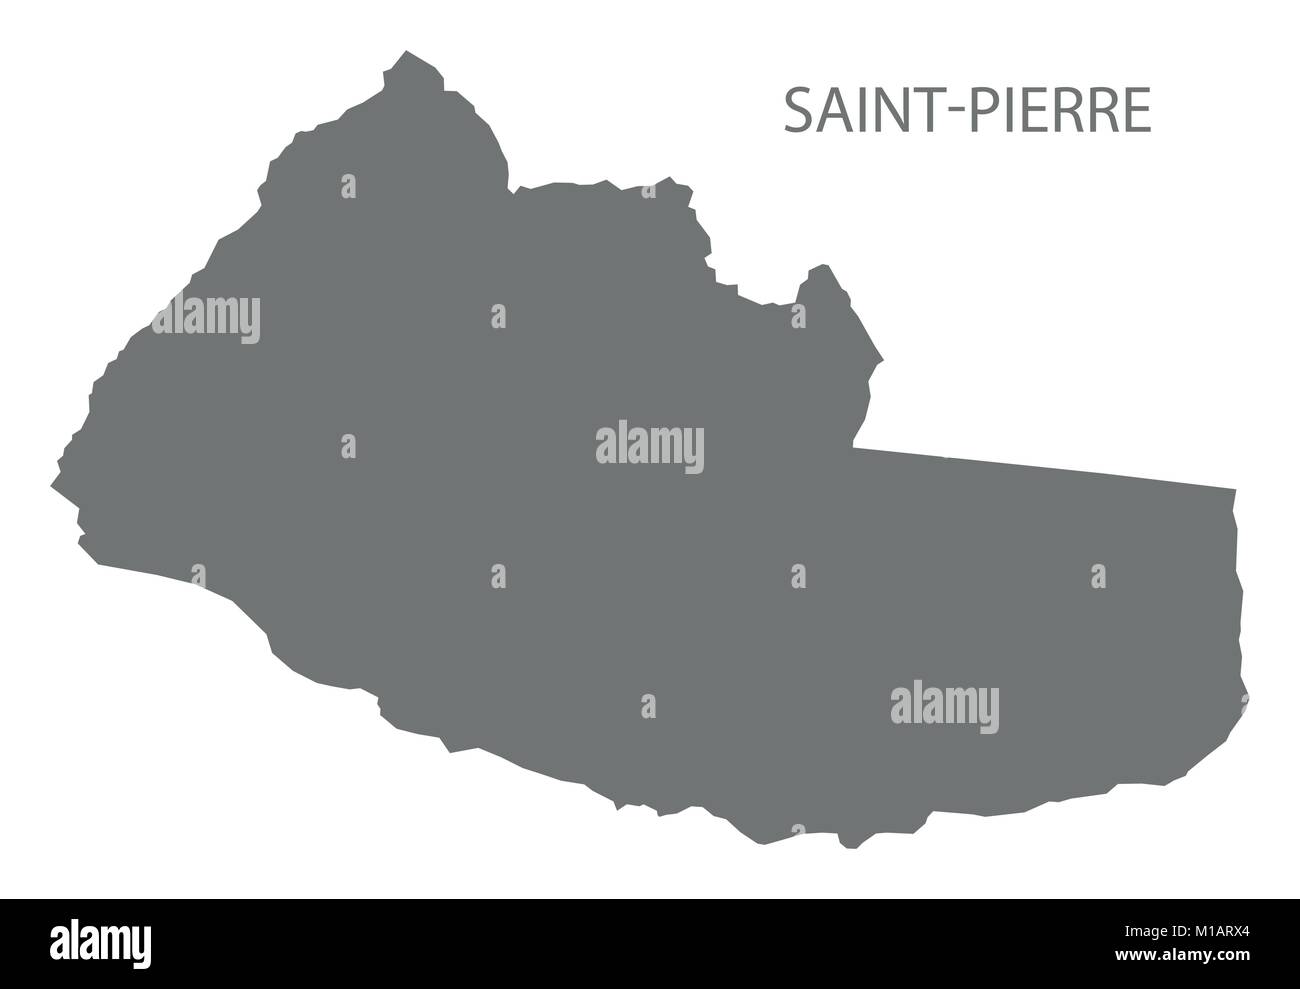 Saint-Pierre Karte von Reunion Grau Abbildung silhouette Form Stock Vektor